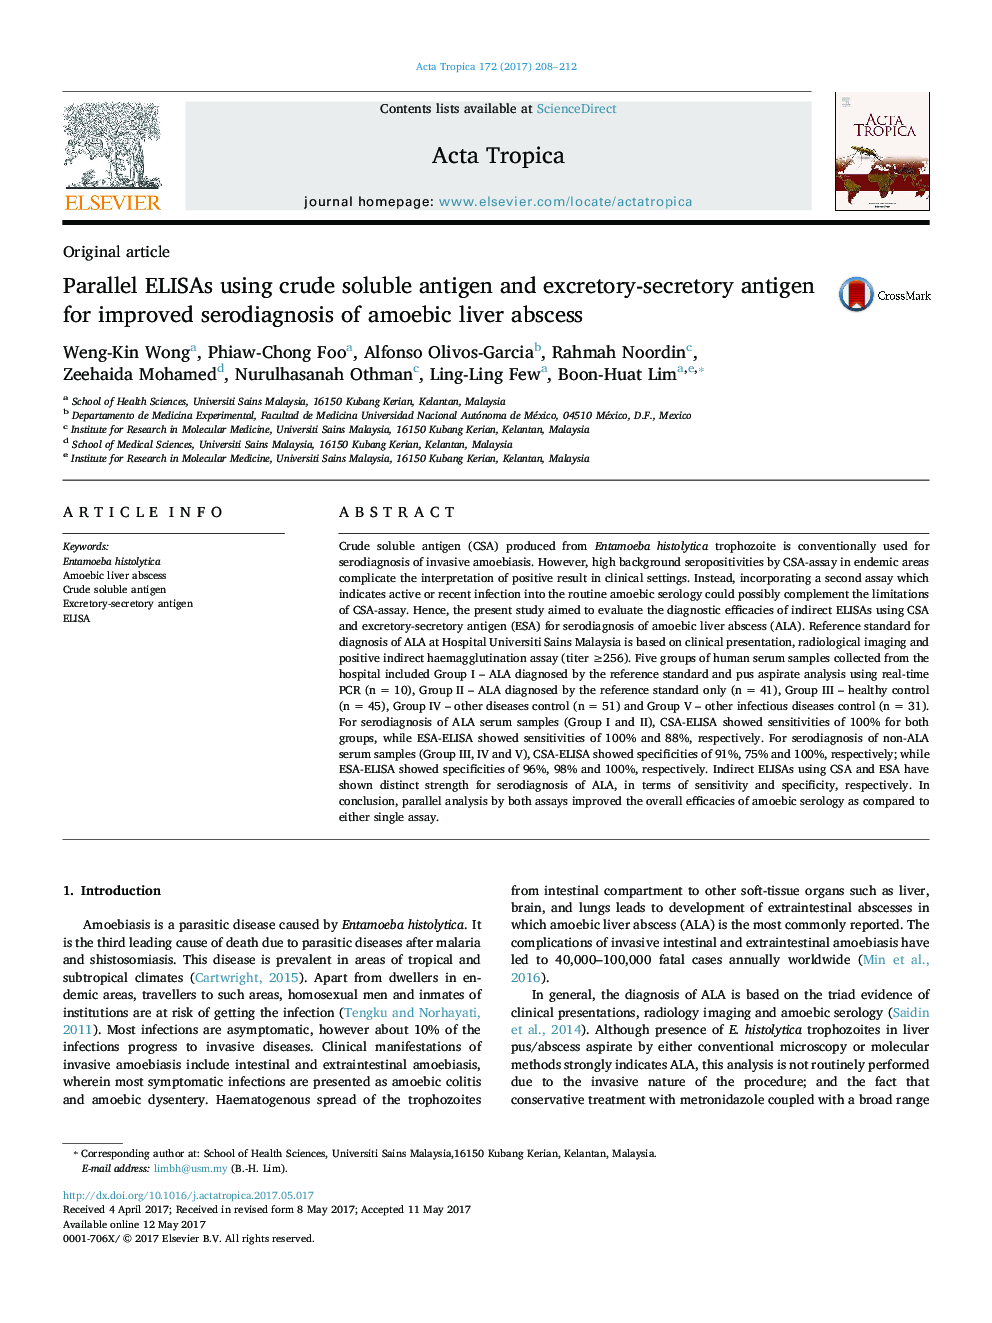 Parallel ELISAs using crude soluble antigen and excretory-secretory antigen for improved serodiagnosis of amoebic liver abscess